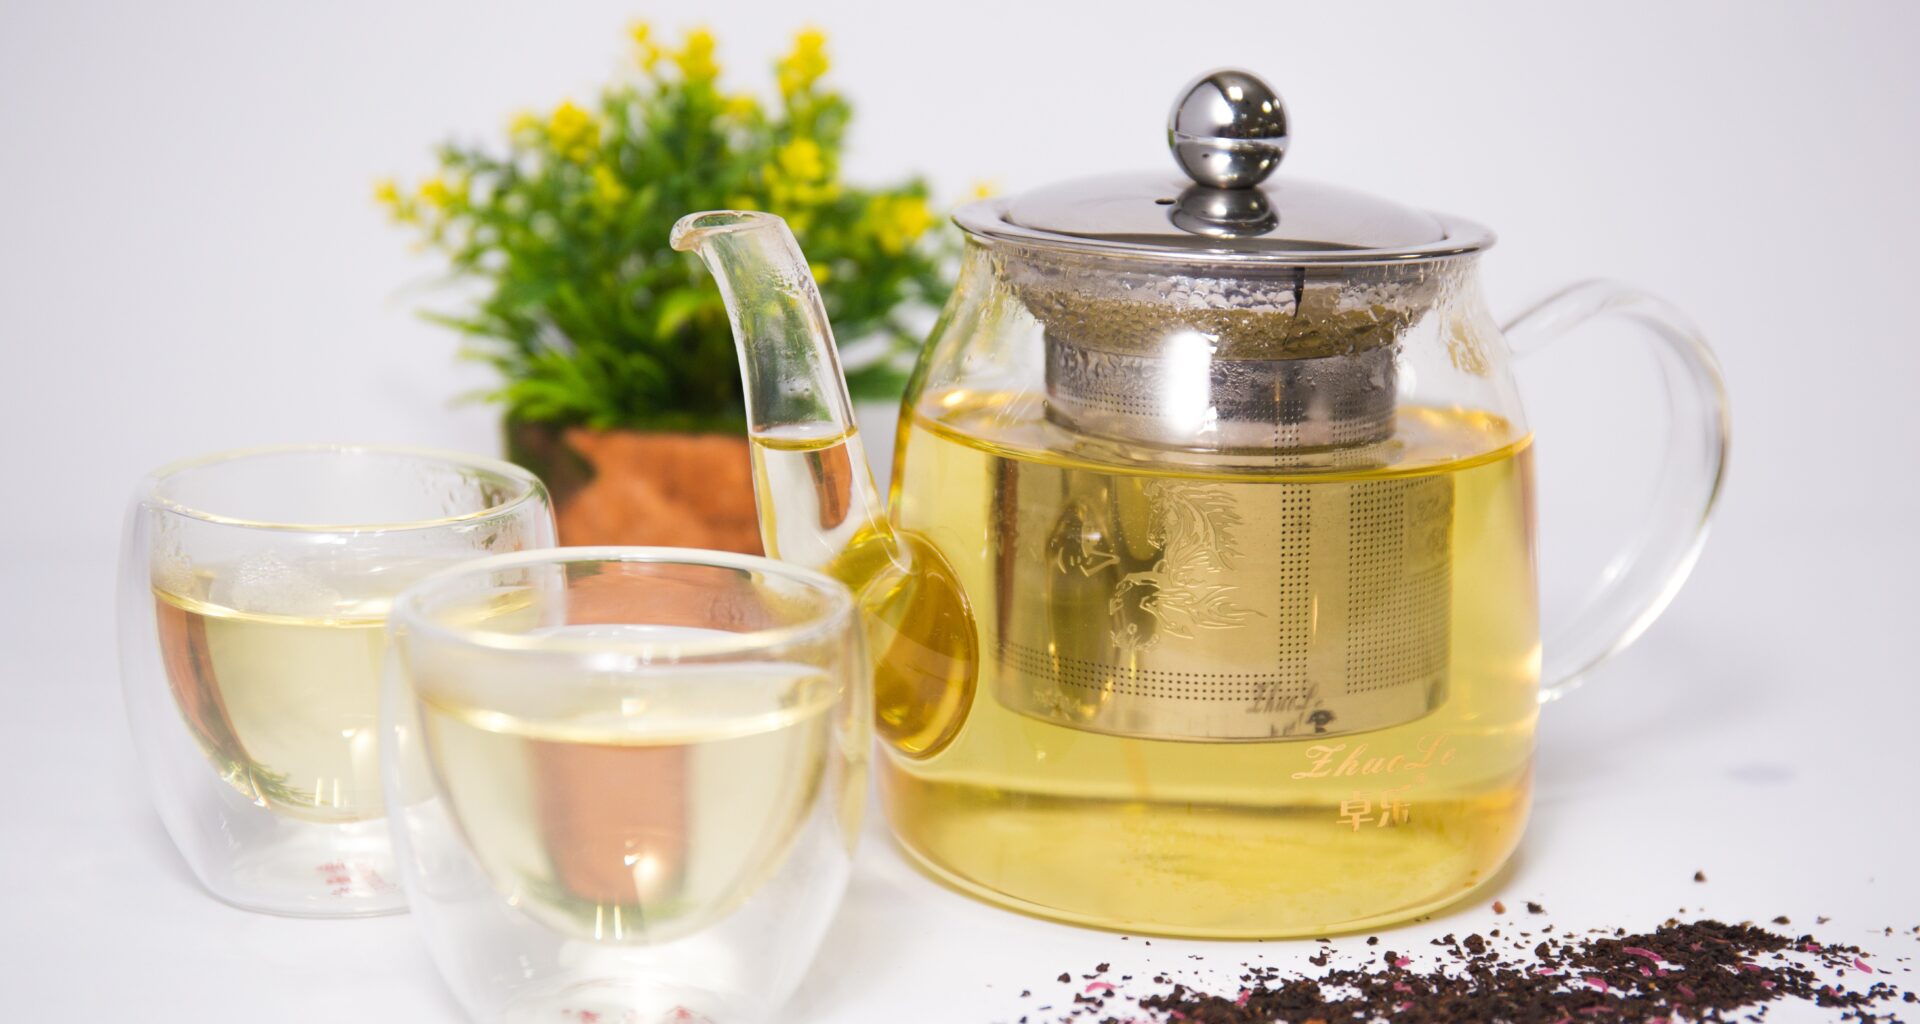 Herbal element teas